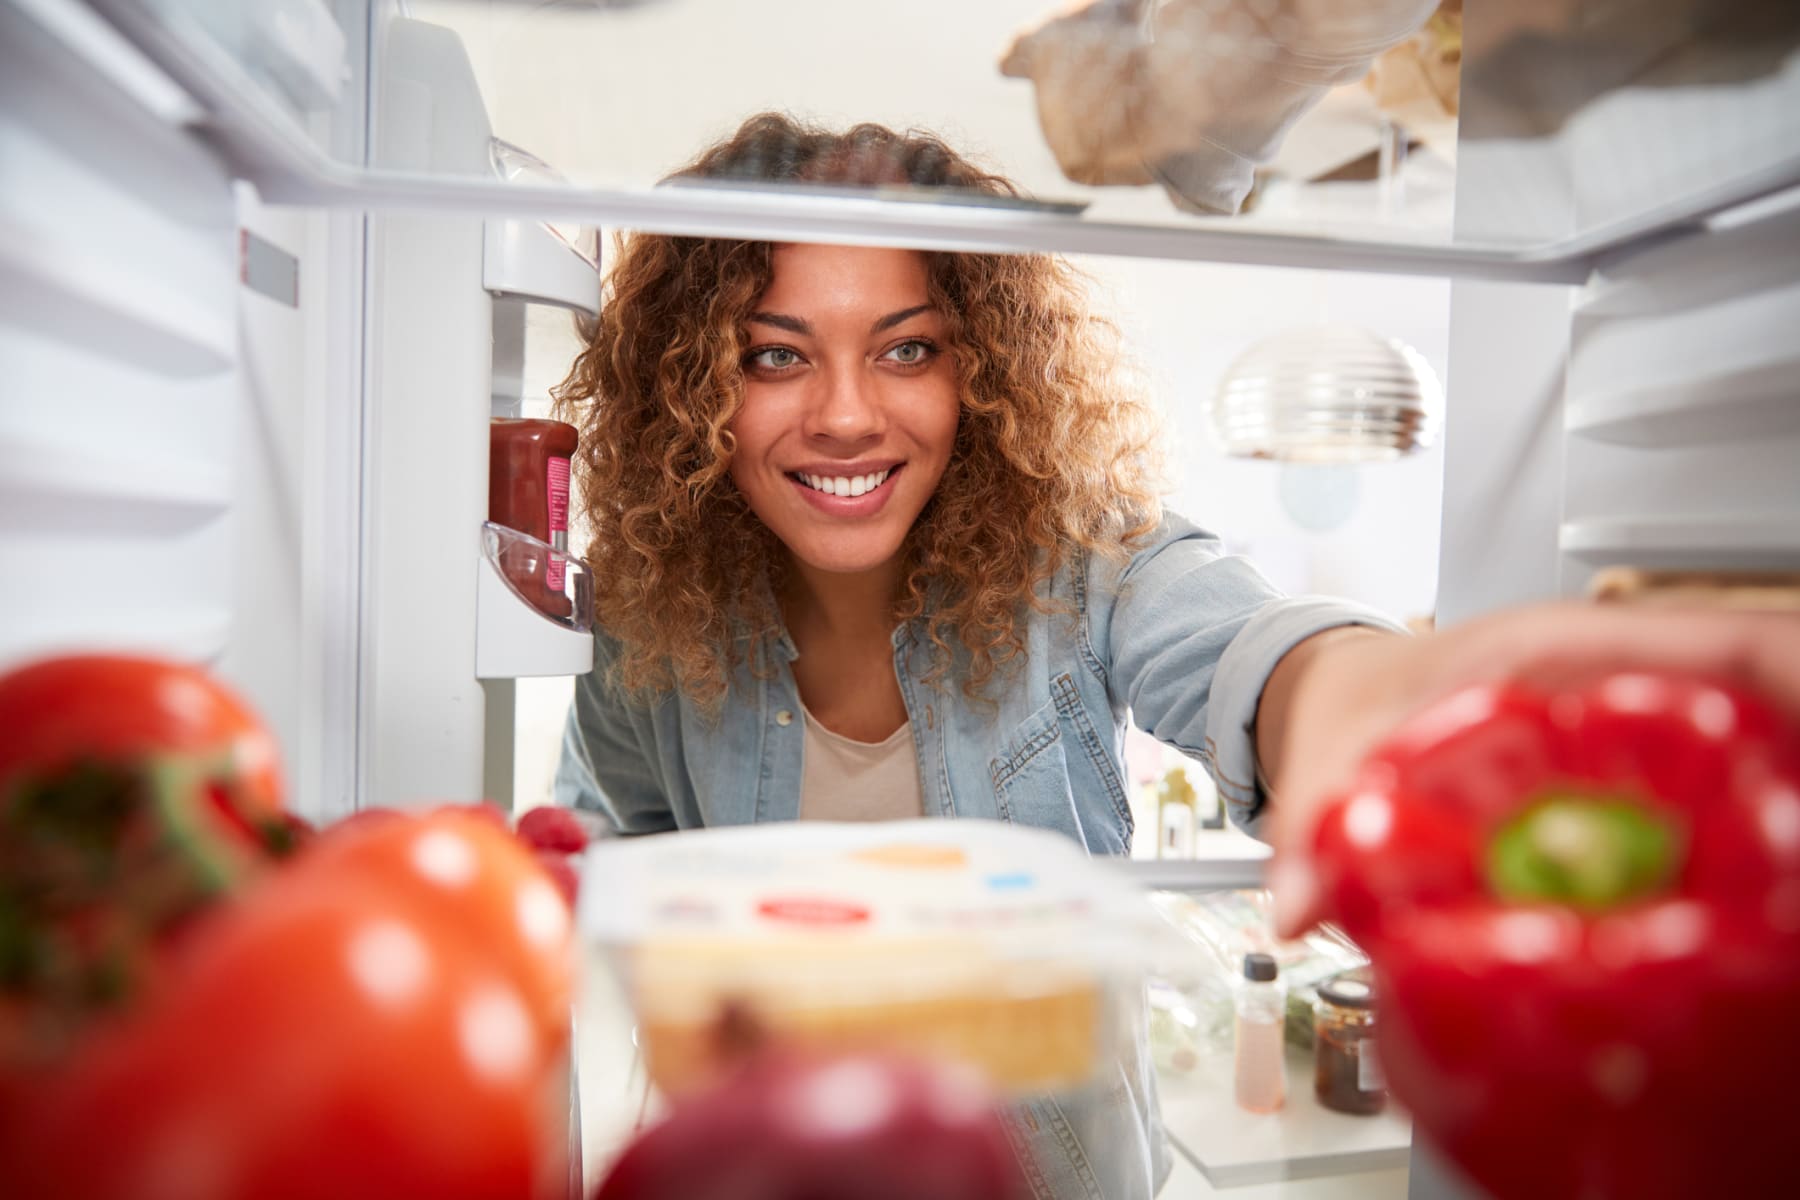 woman puts food into fridge